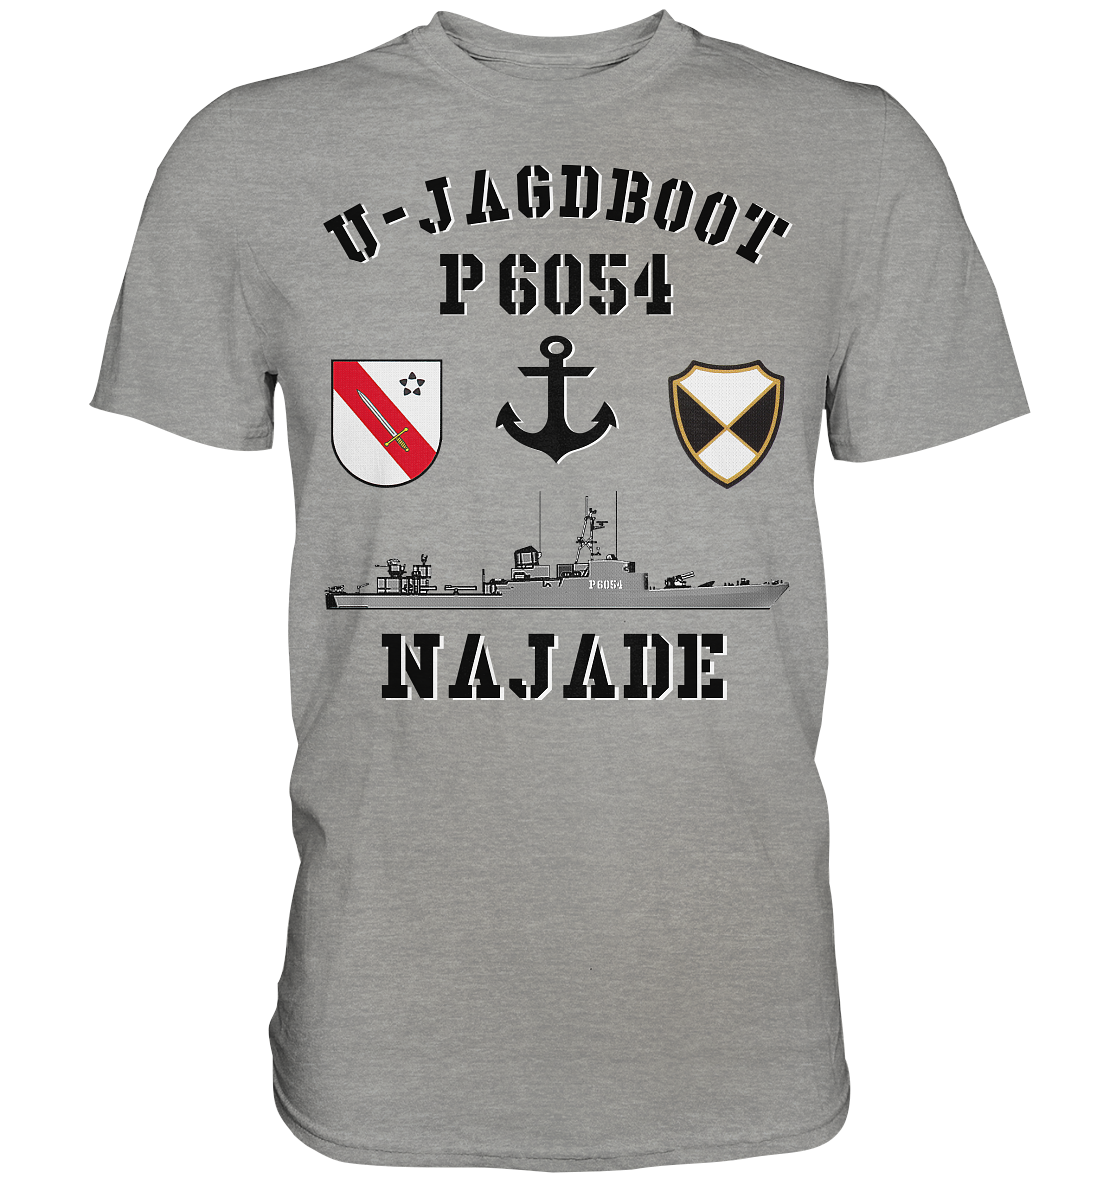 U-Jagdboot P6054 NAJADE Anker - Premium Shirt